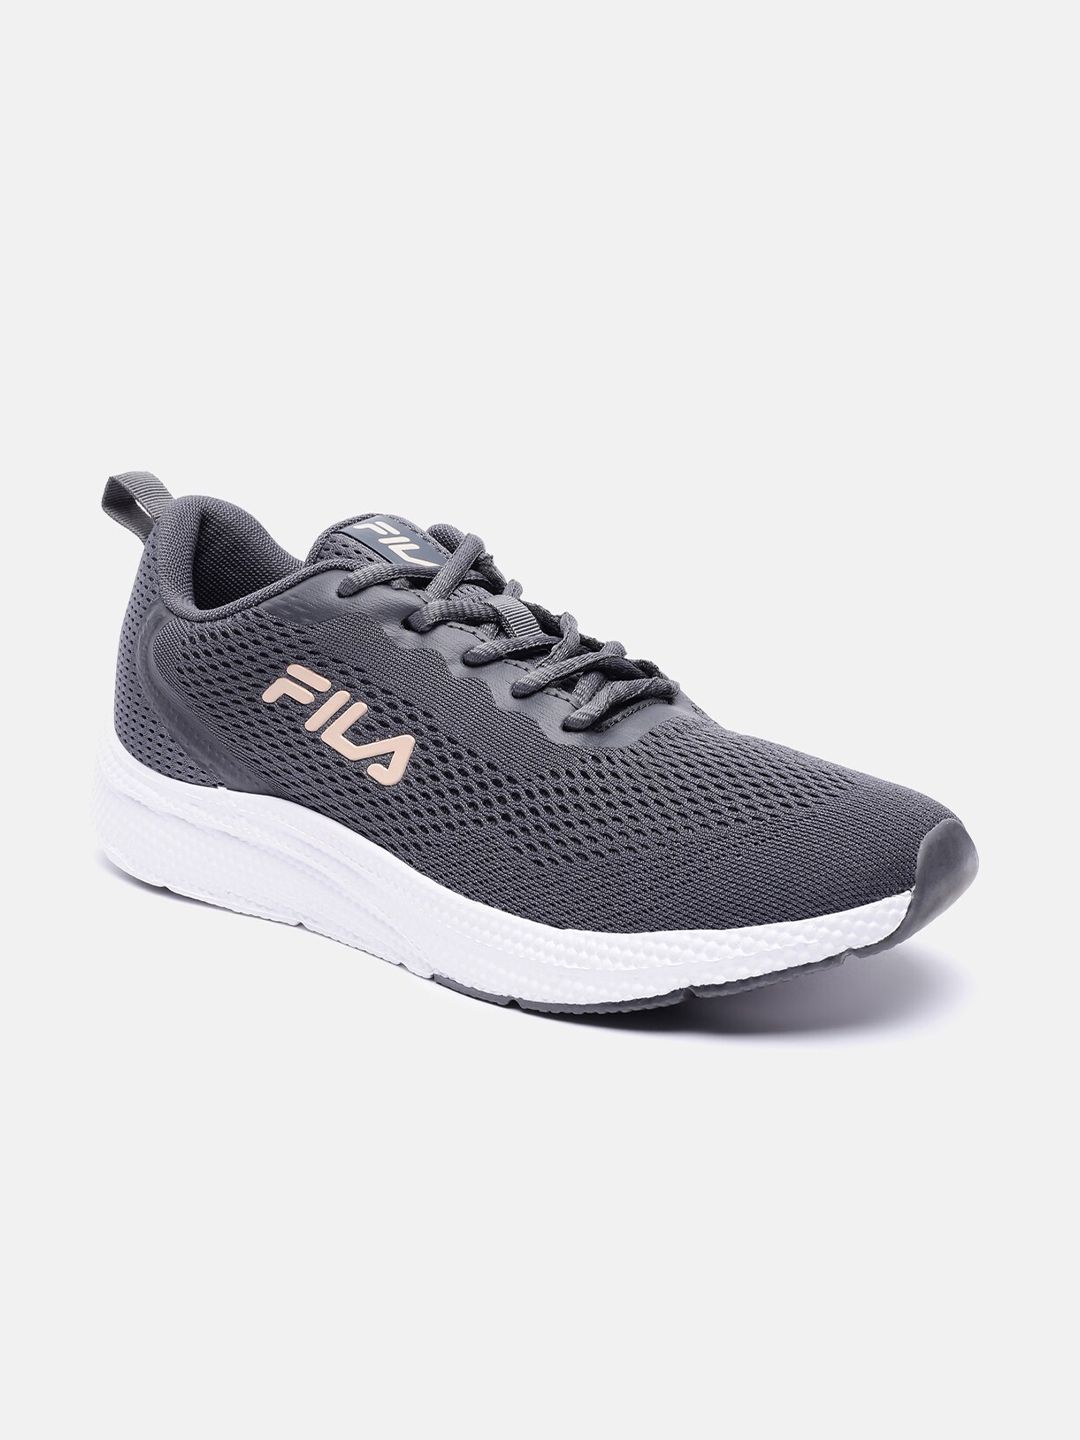 FILA Women Grey Running Non-Marking Shoes Price in India